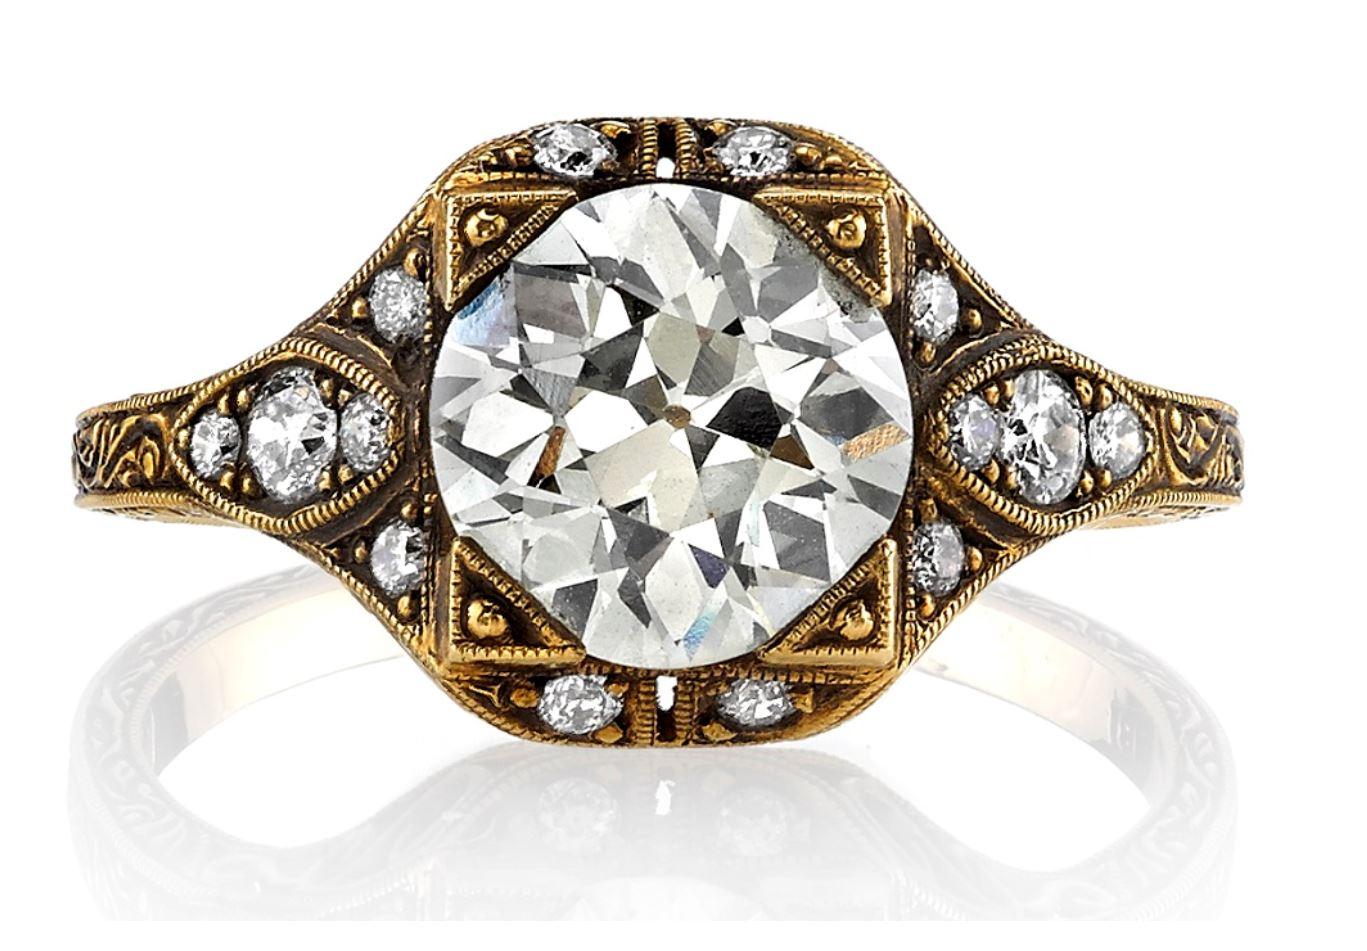 Women's 1.72 Old European Cut Diamond Ring Set in 18 Karat Oxidized Yellow Gold